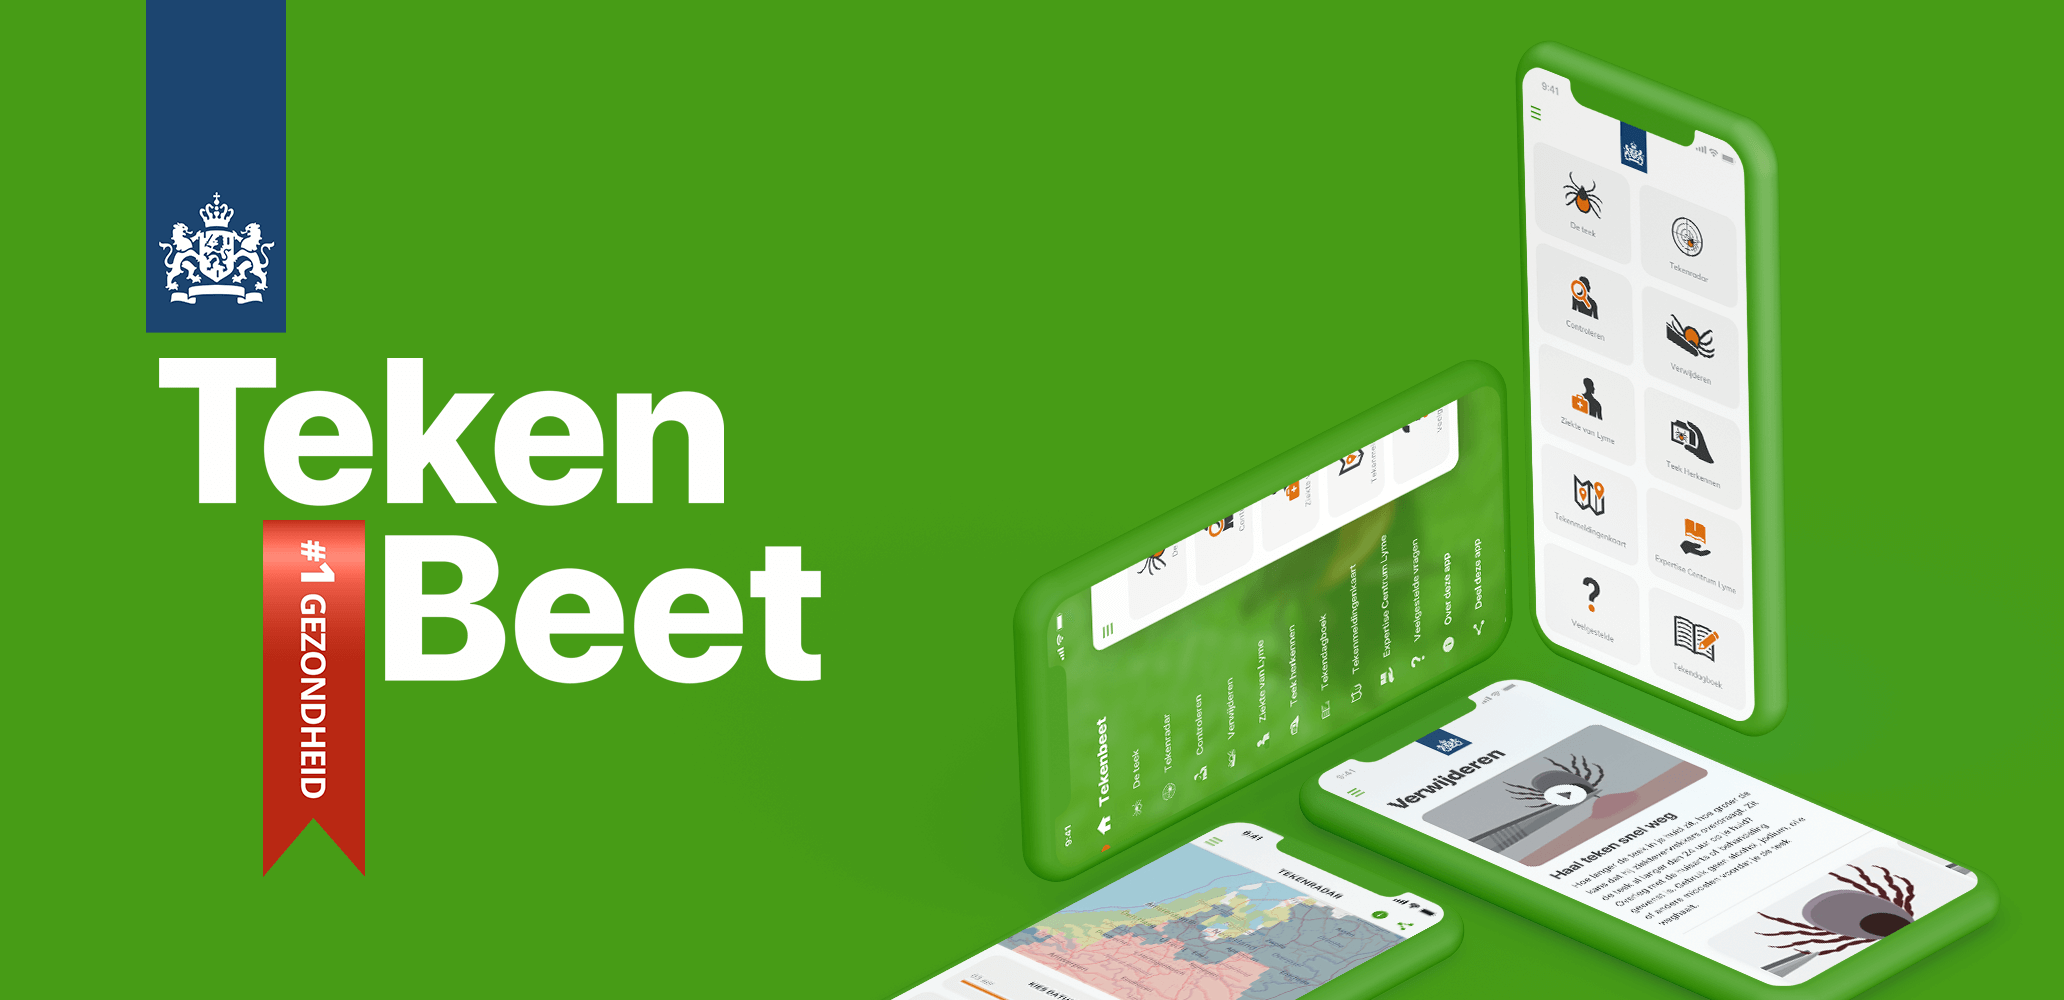 tekenbeet app example image